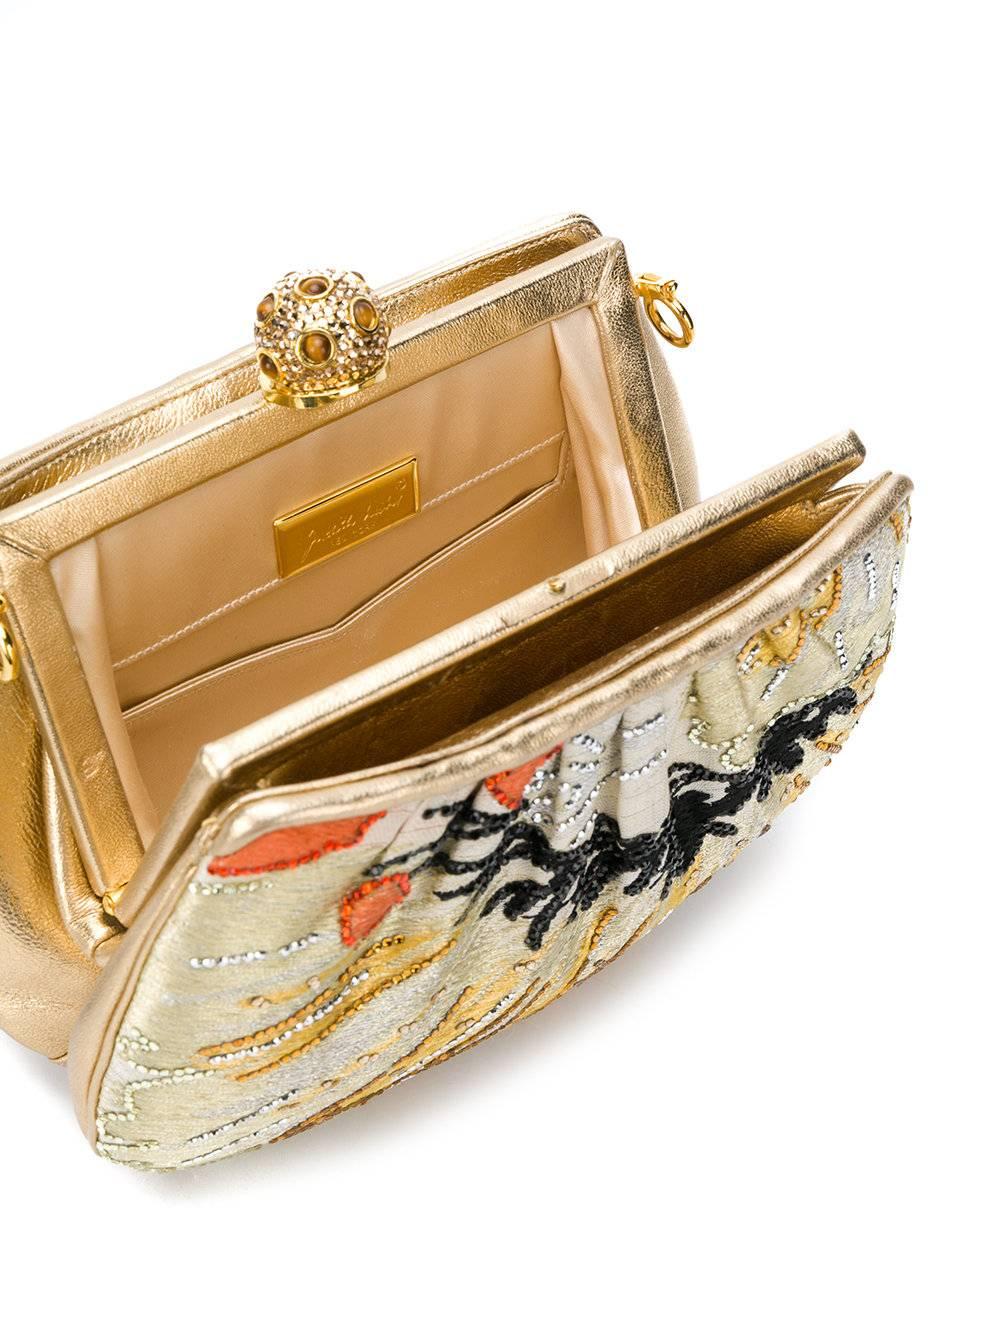 Women's Vintage Judith Leiber Gold Clutch Bag